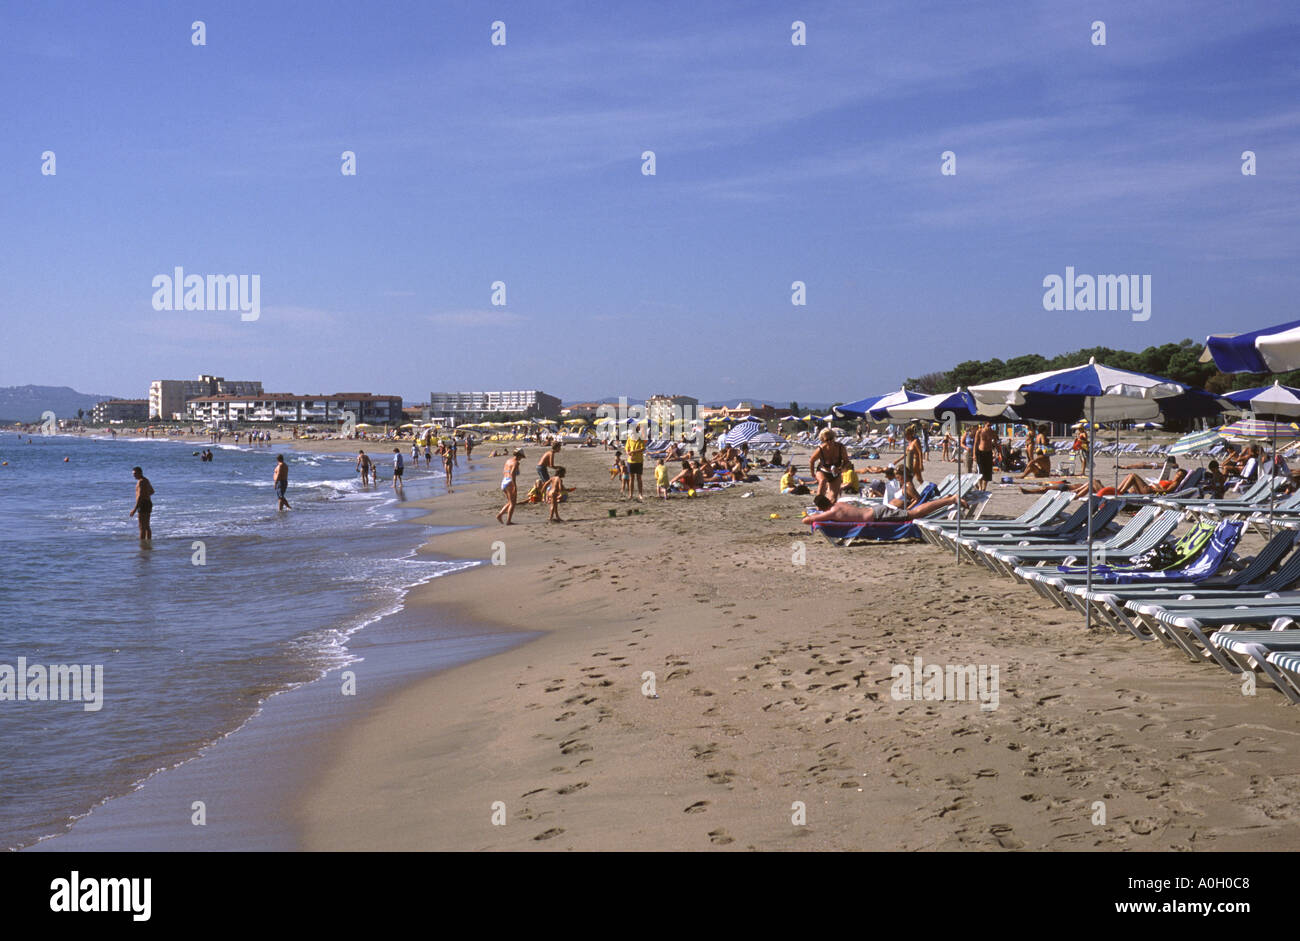 The beach at L'Estartit, Costa Brava, Spain. Stock Photo